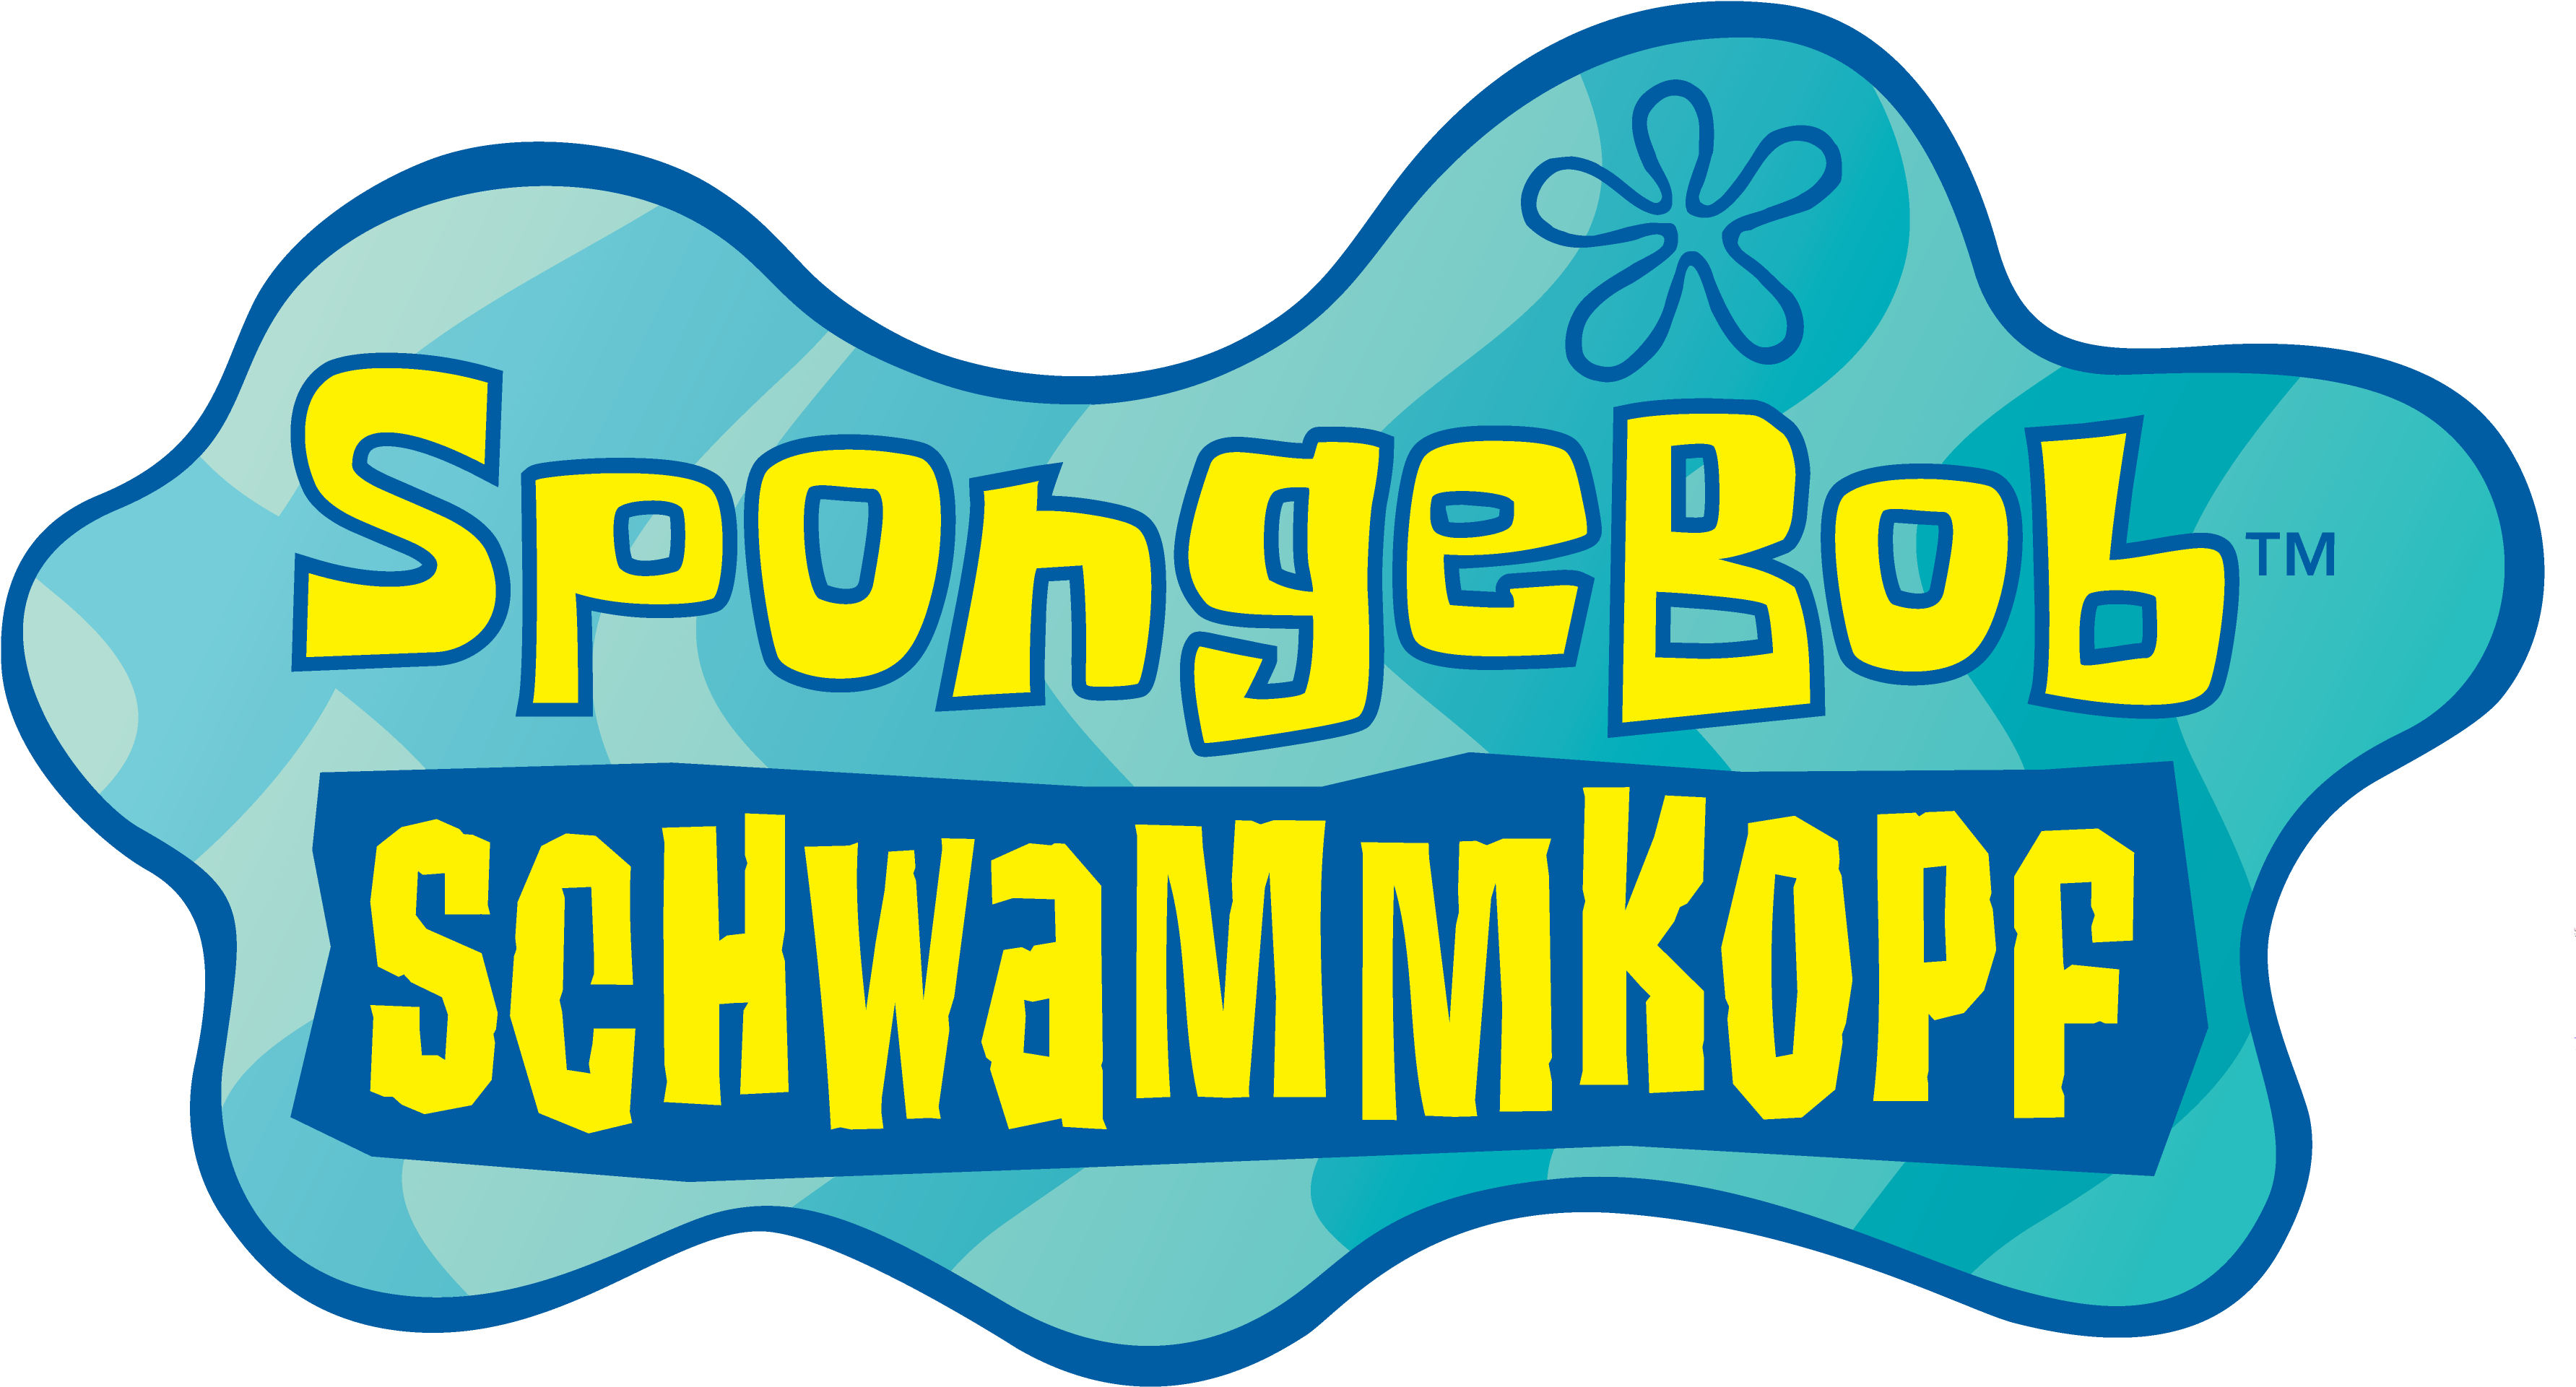 Old Logo - Spongebob Squarepants (3600x2015)